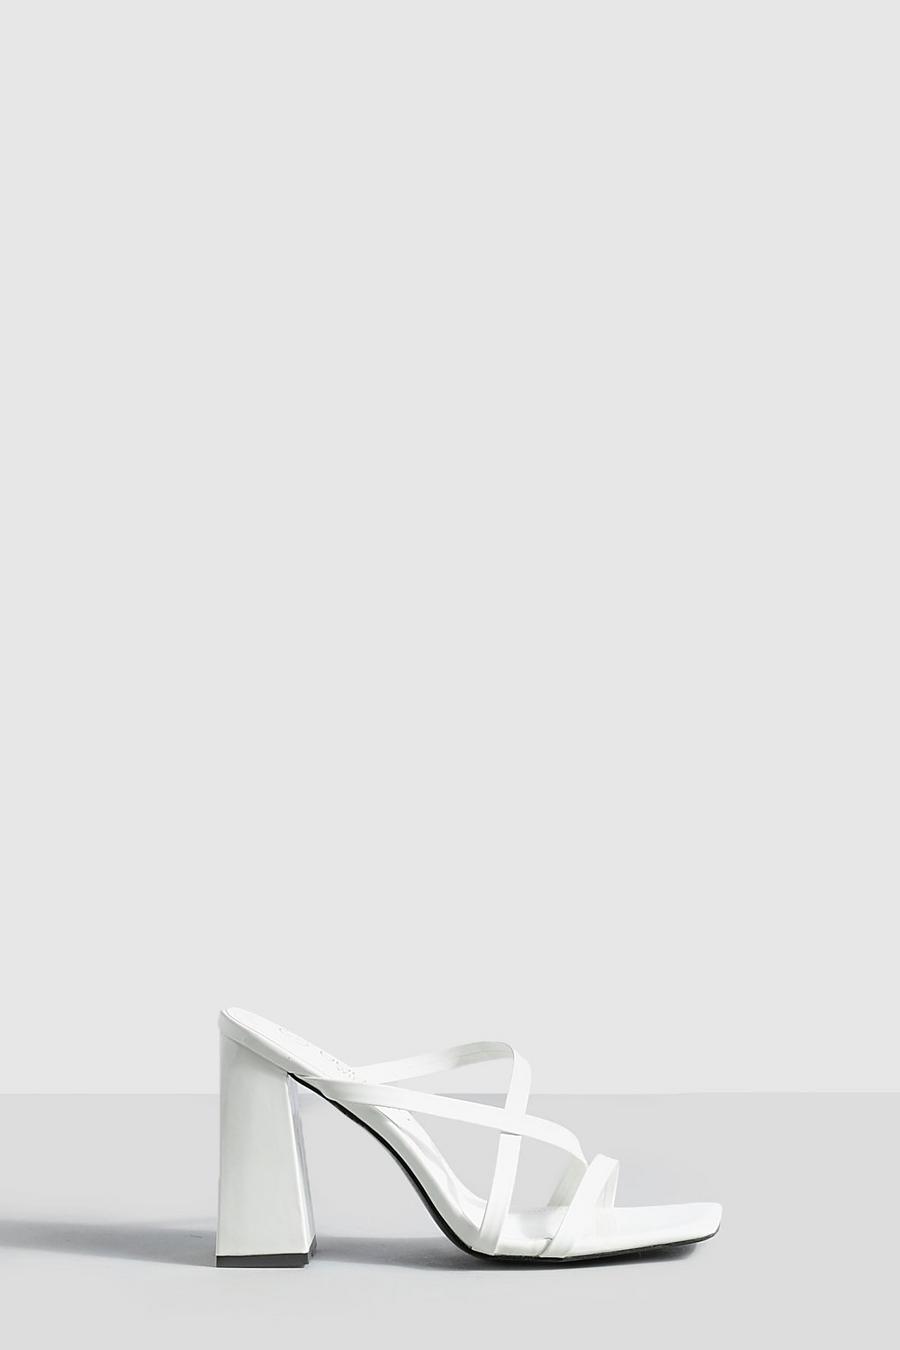 Sandali Mules a calzata ampia a punta quadrata con tacco a blocco, White bianco